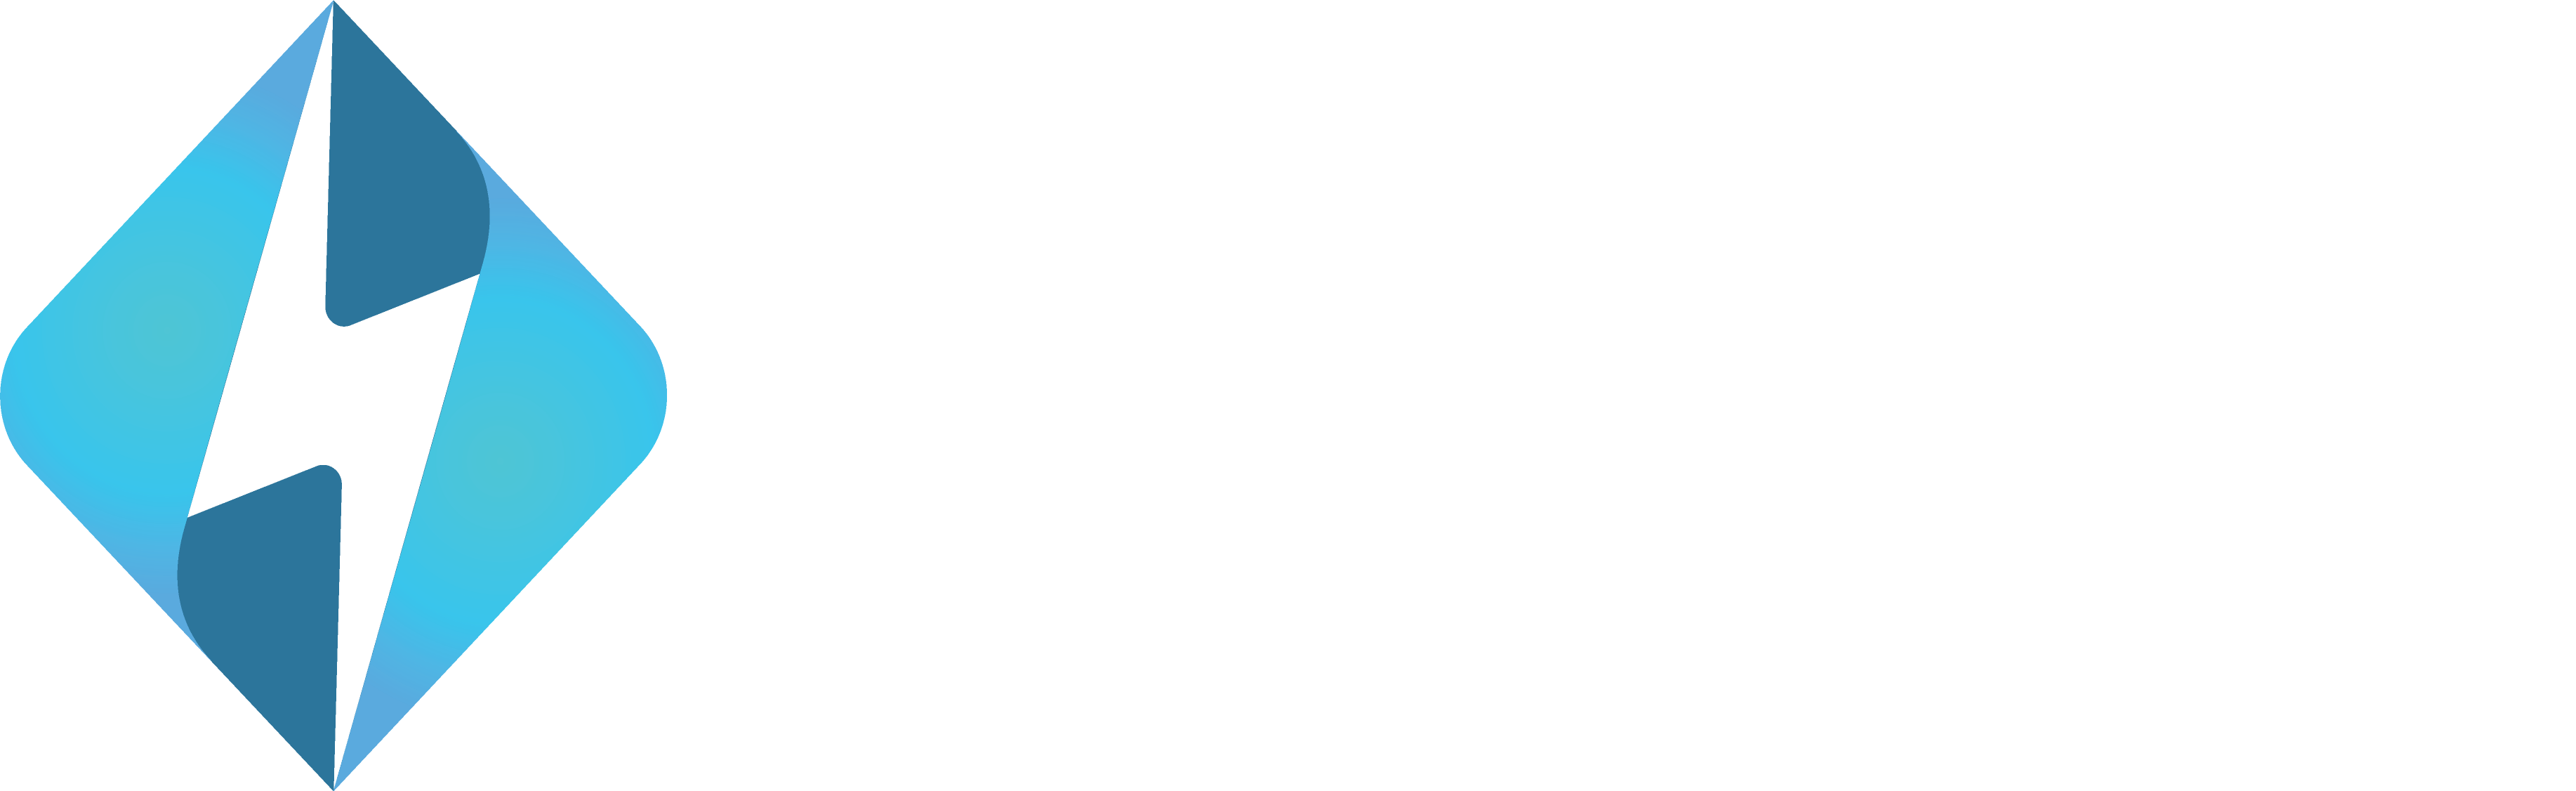 Zyron Tech Logo